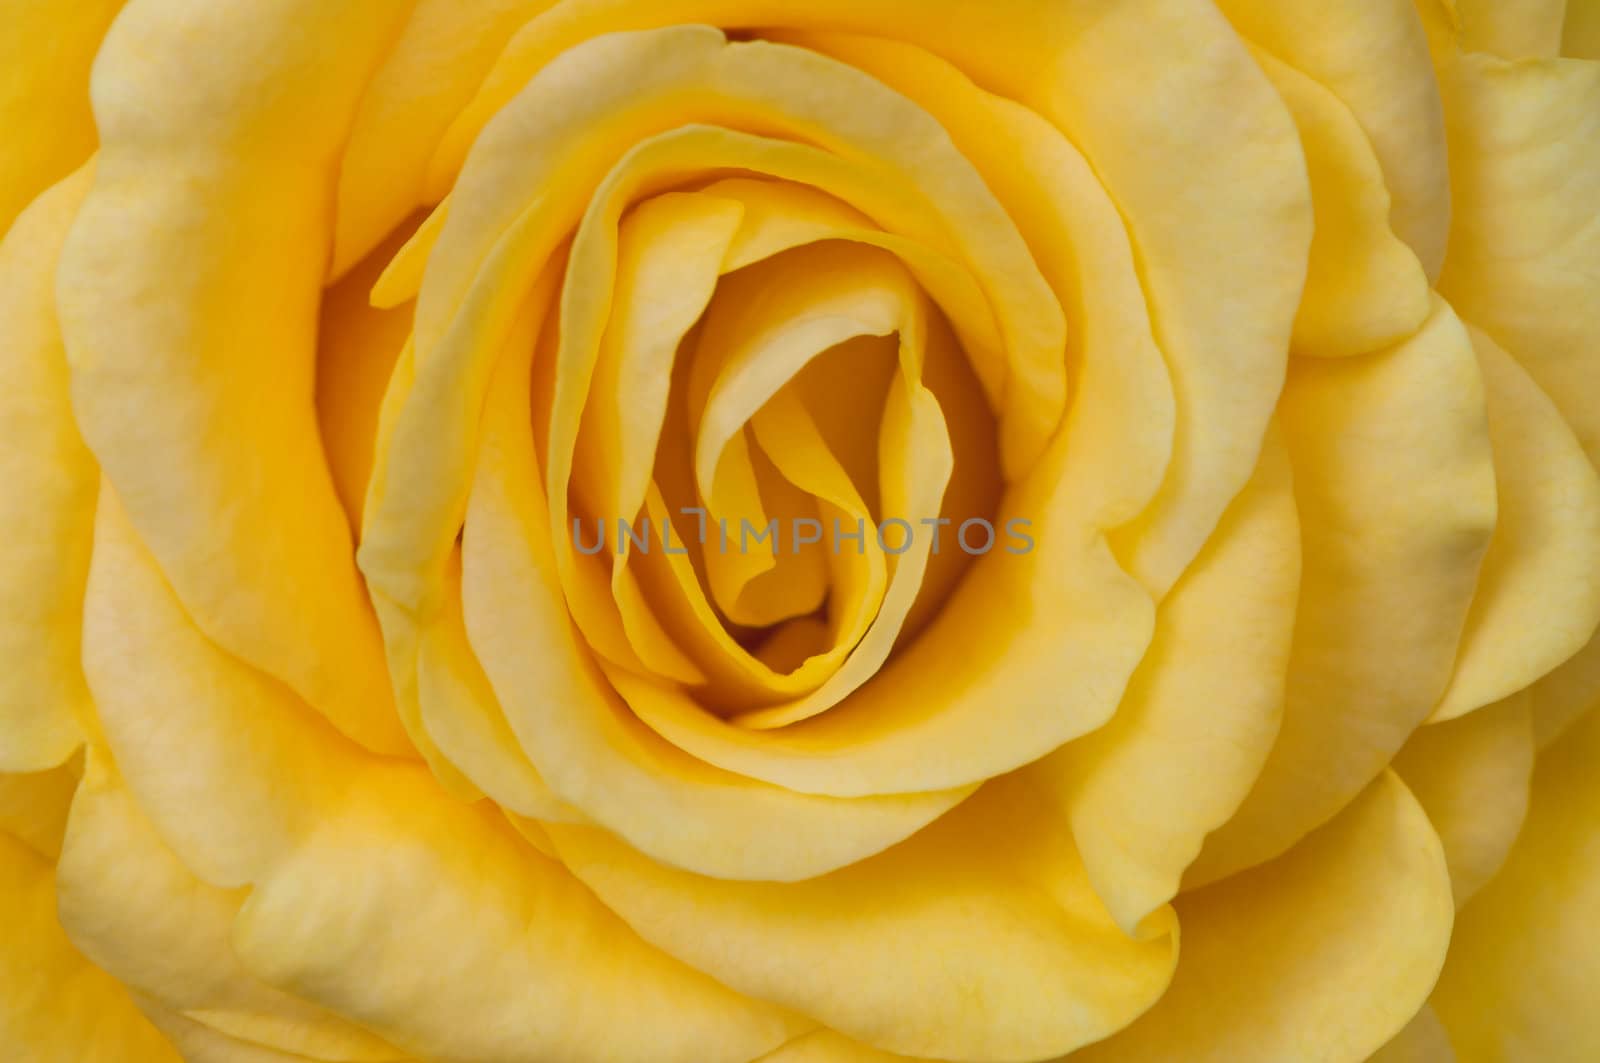 Yellow rosebud close up macro photography.